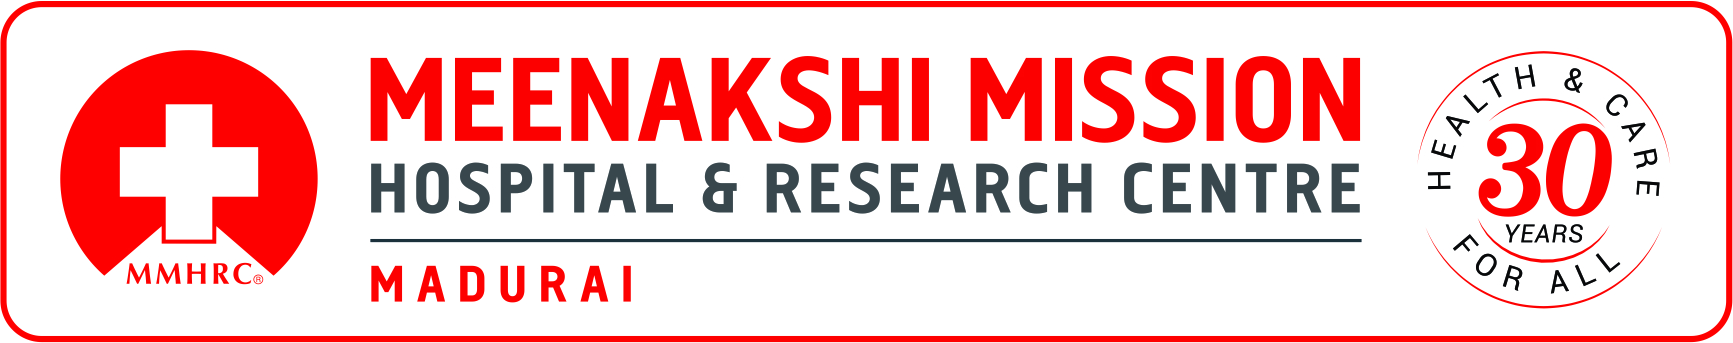 Meenakshi Mission Hospital & Research Centre logo